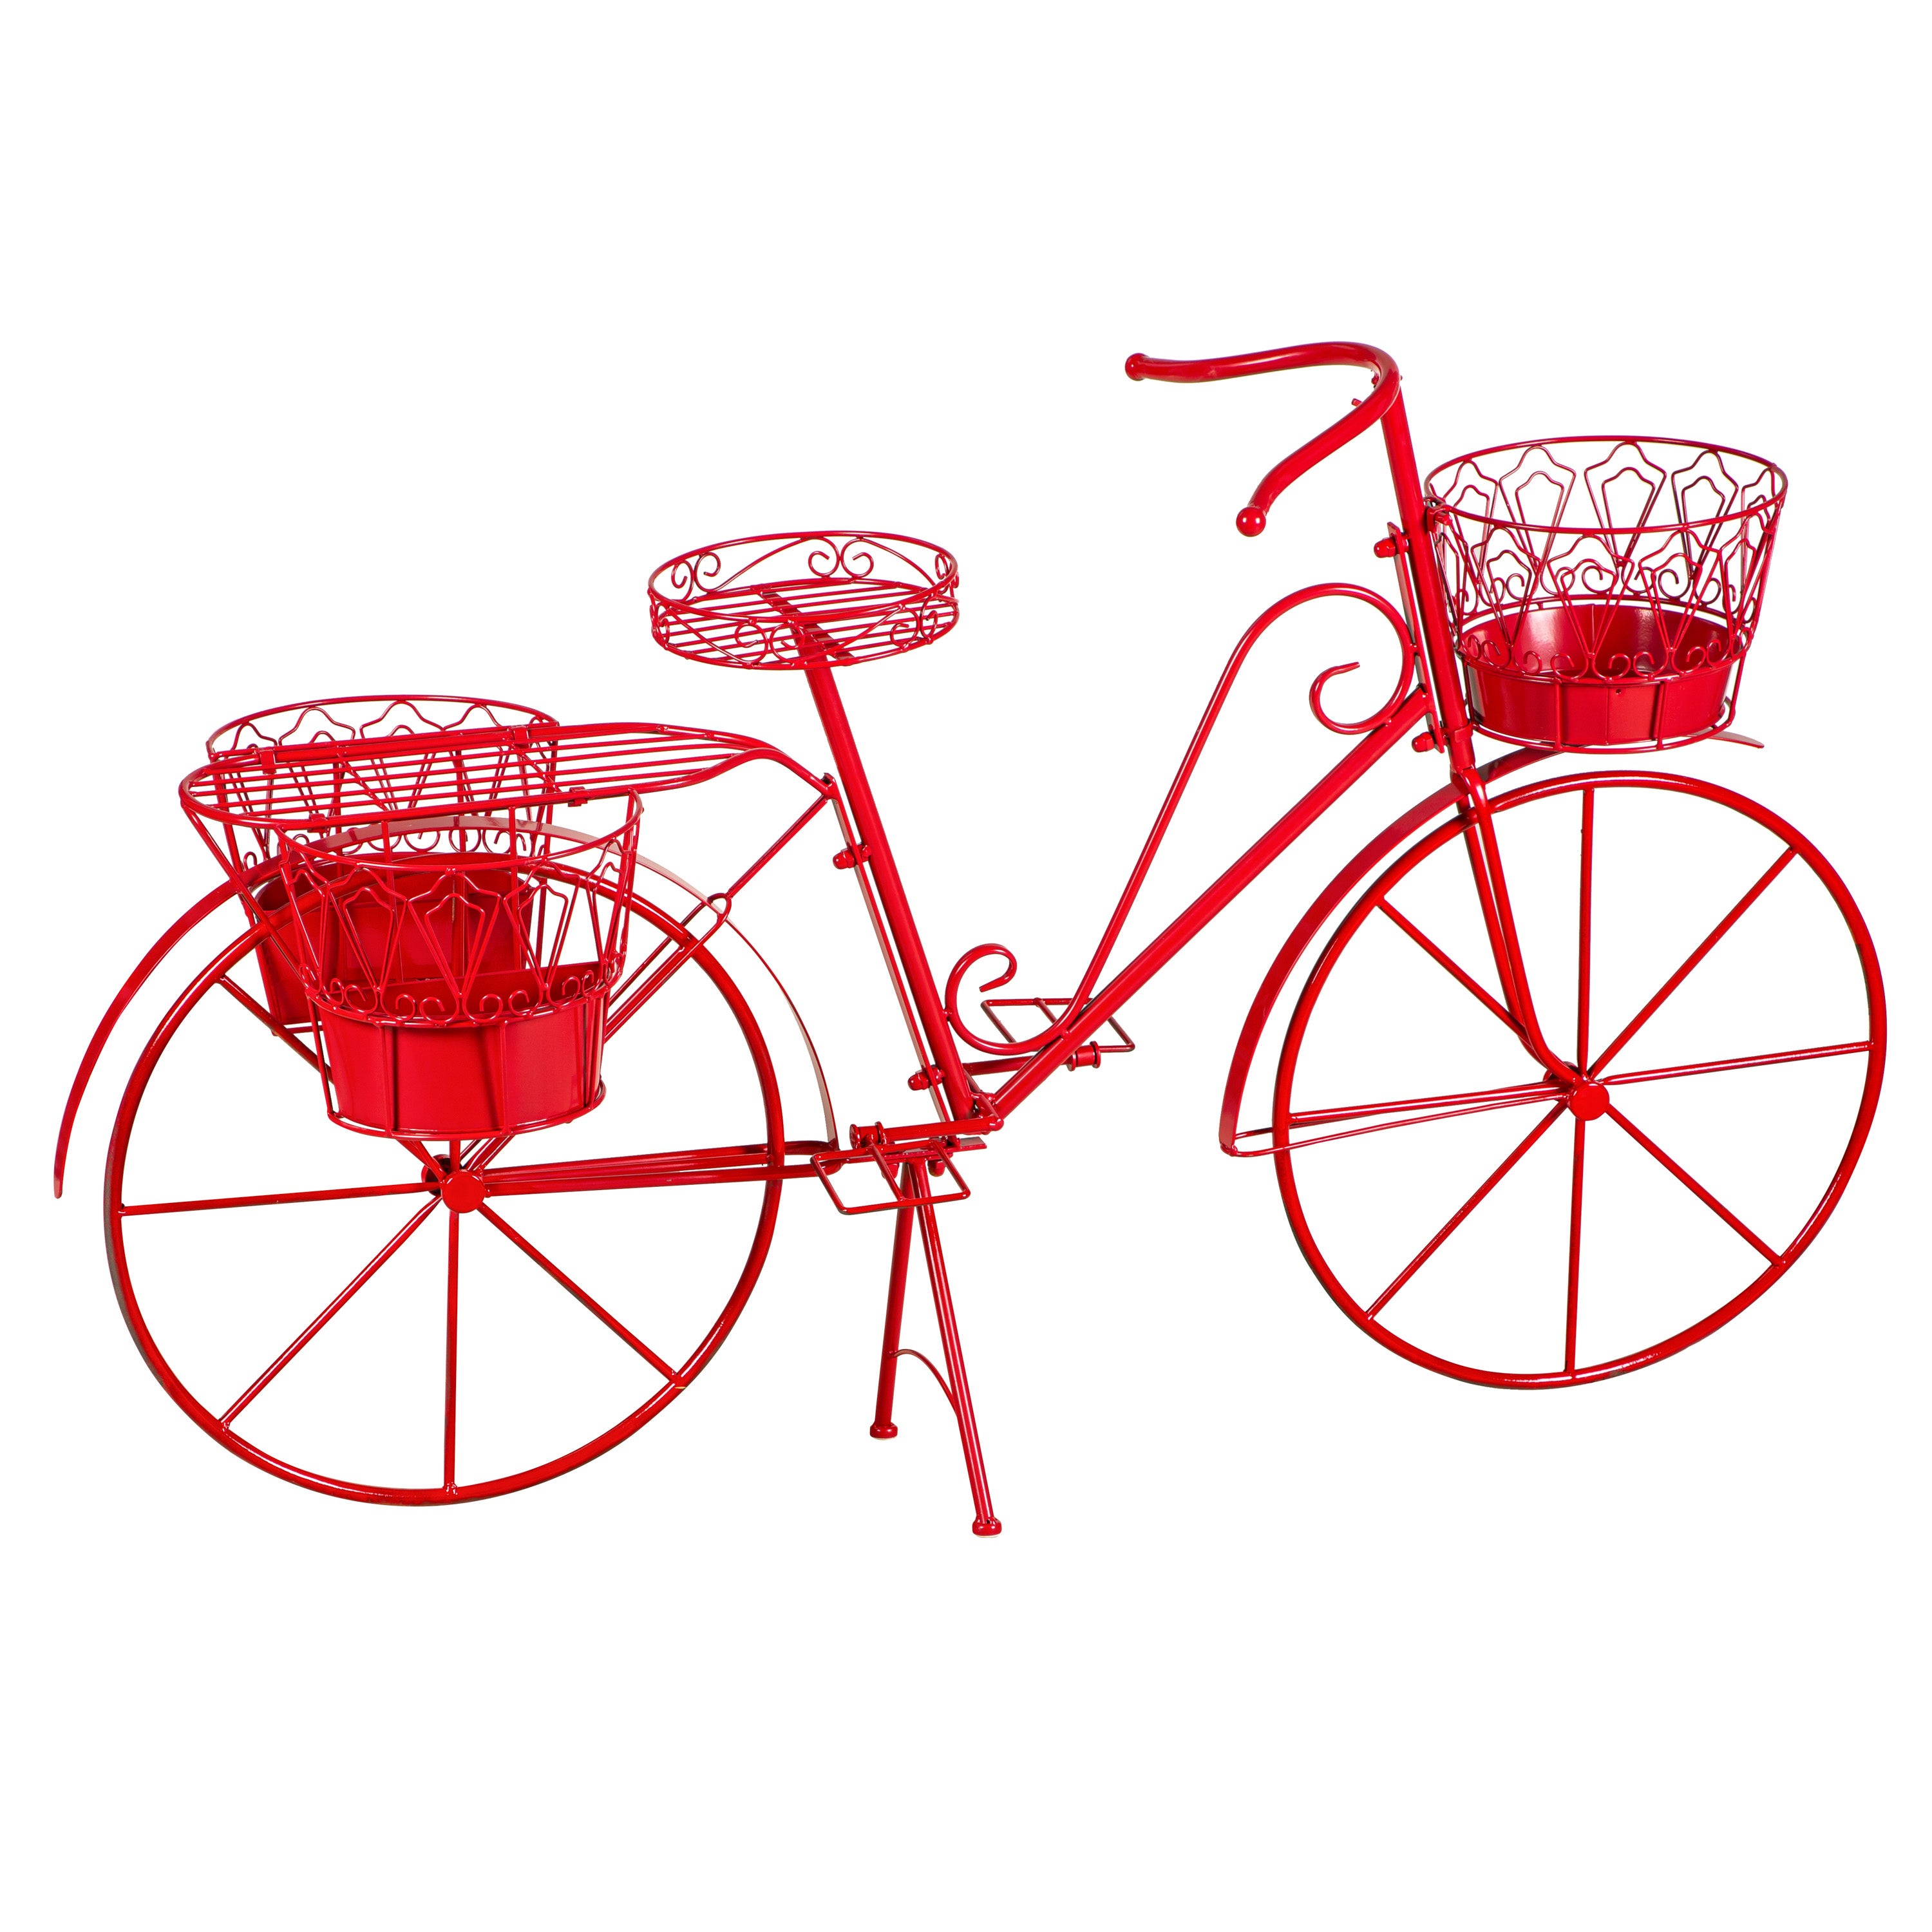 Red Metal Bicycle Planter